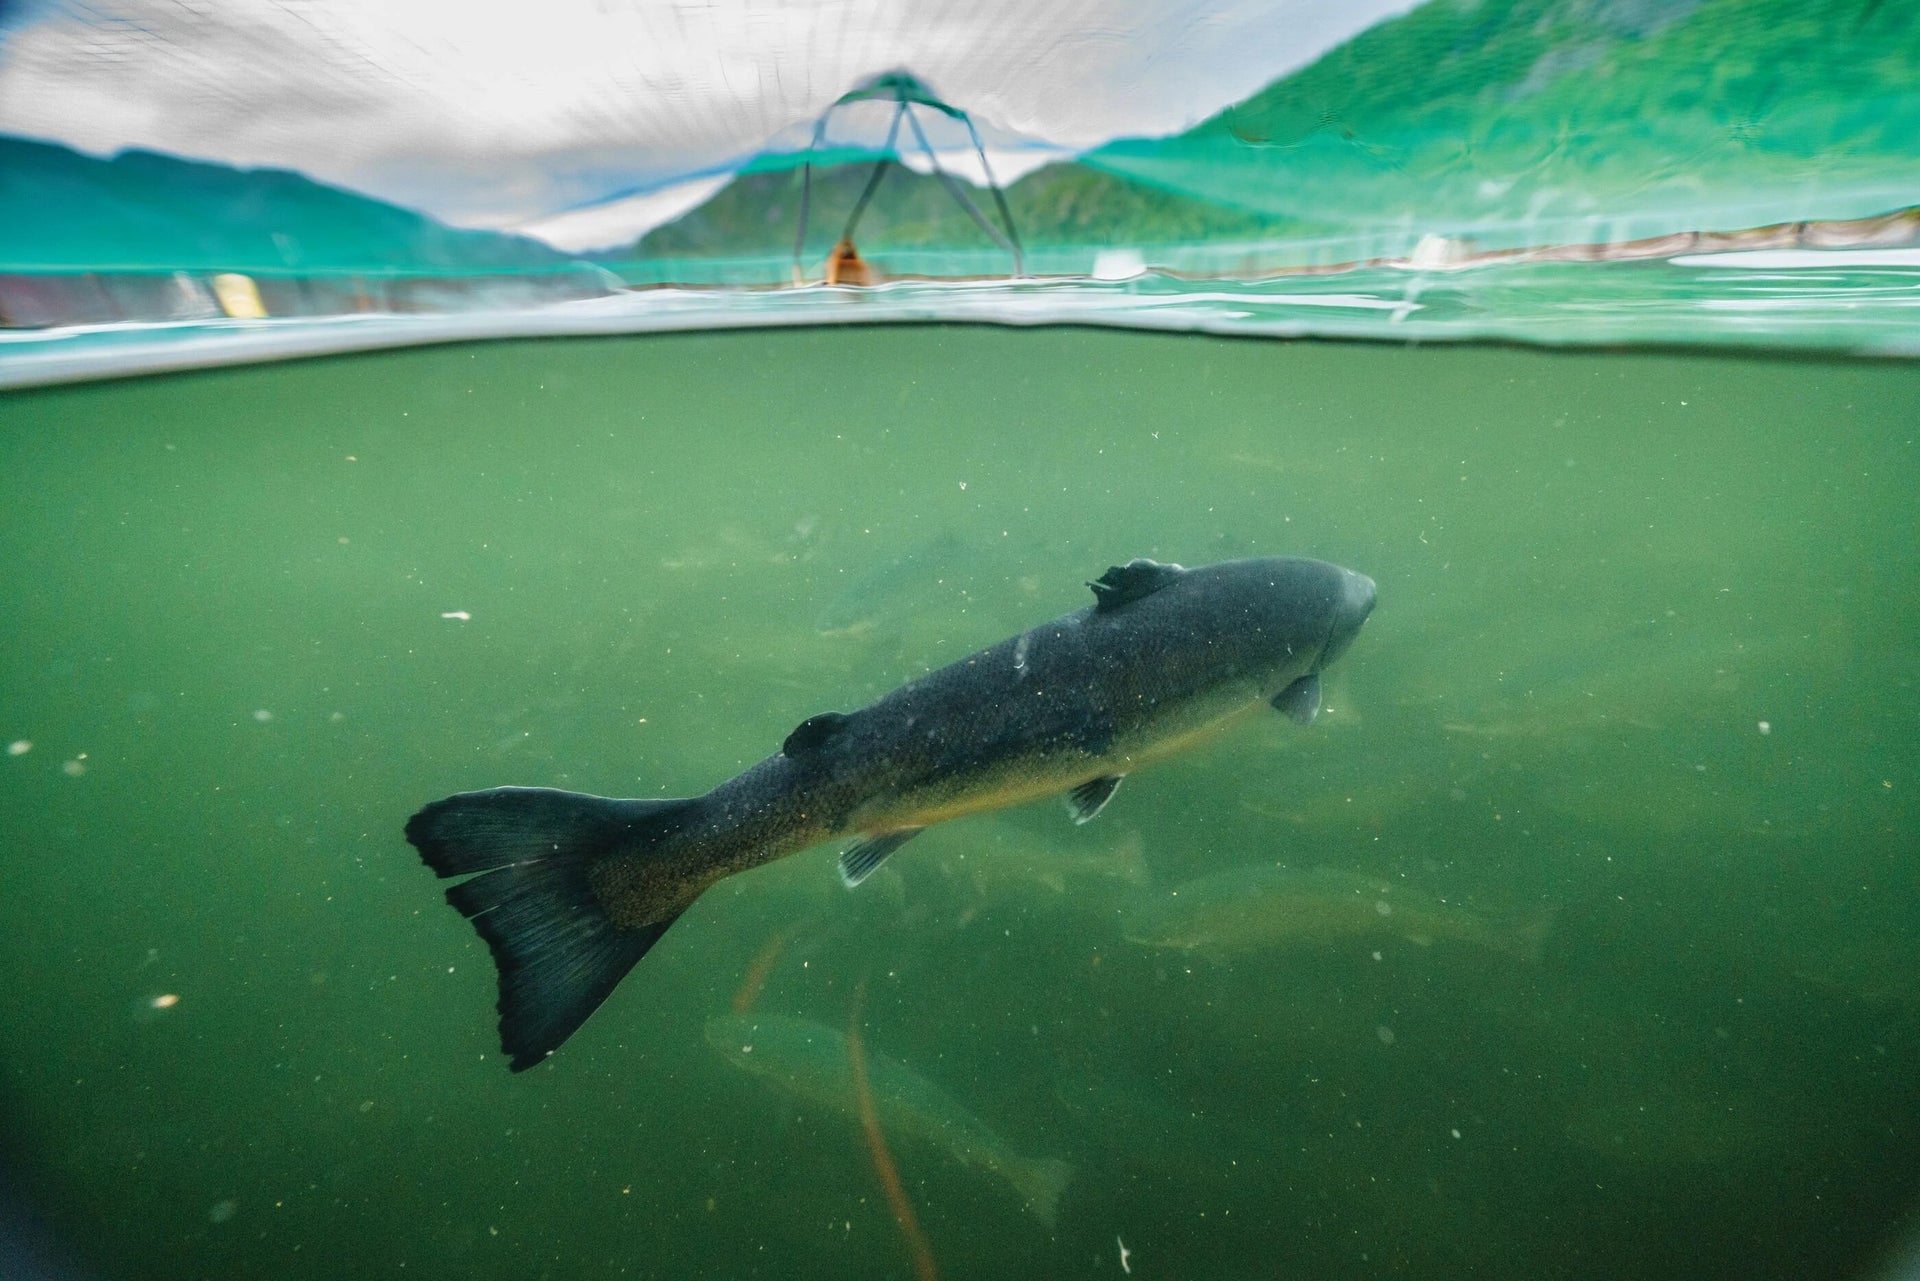 A maimed, farmed salmon, as seen in Patagonia film 'Artifishal'. Photo: Ben Moon.